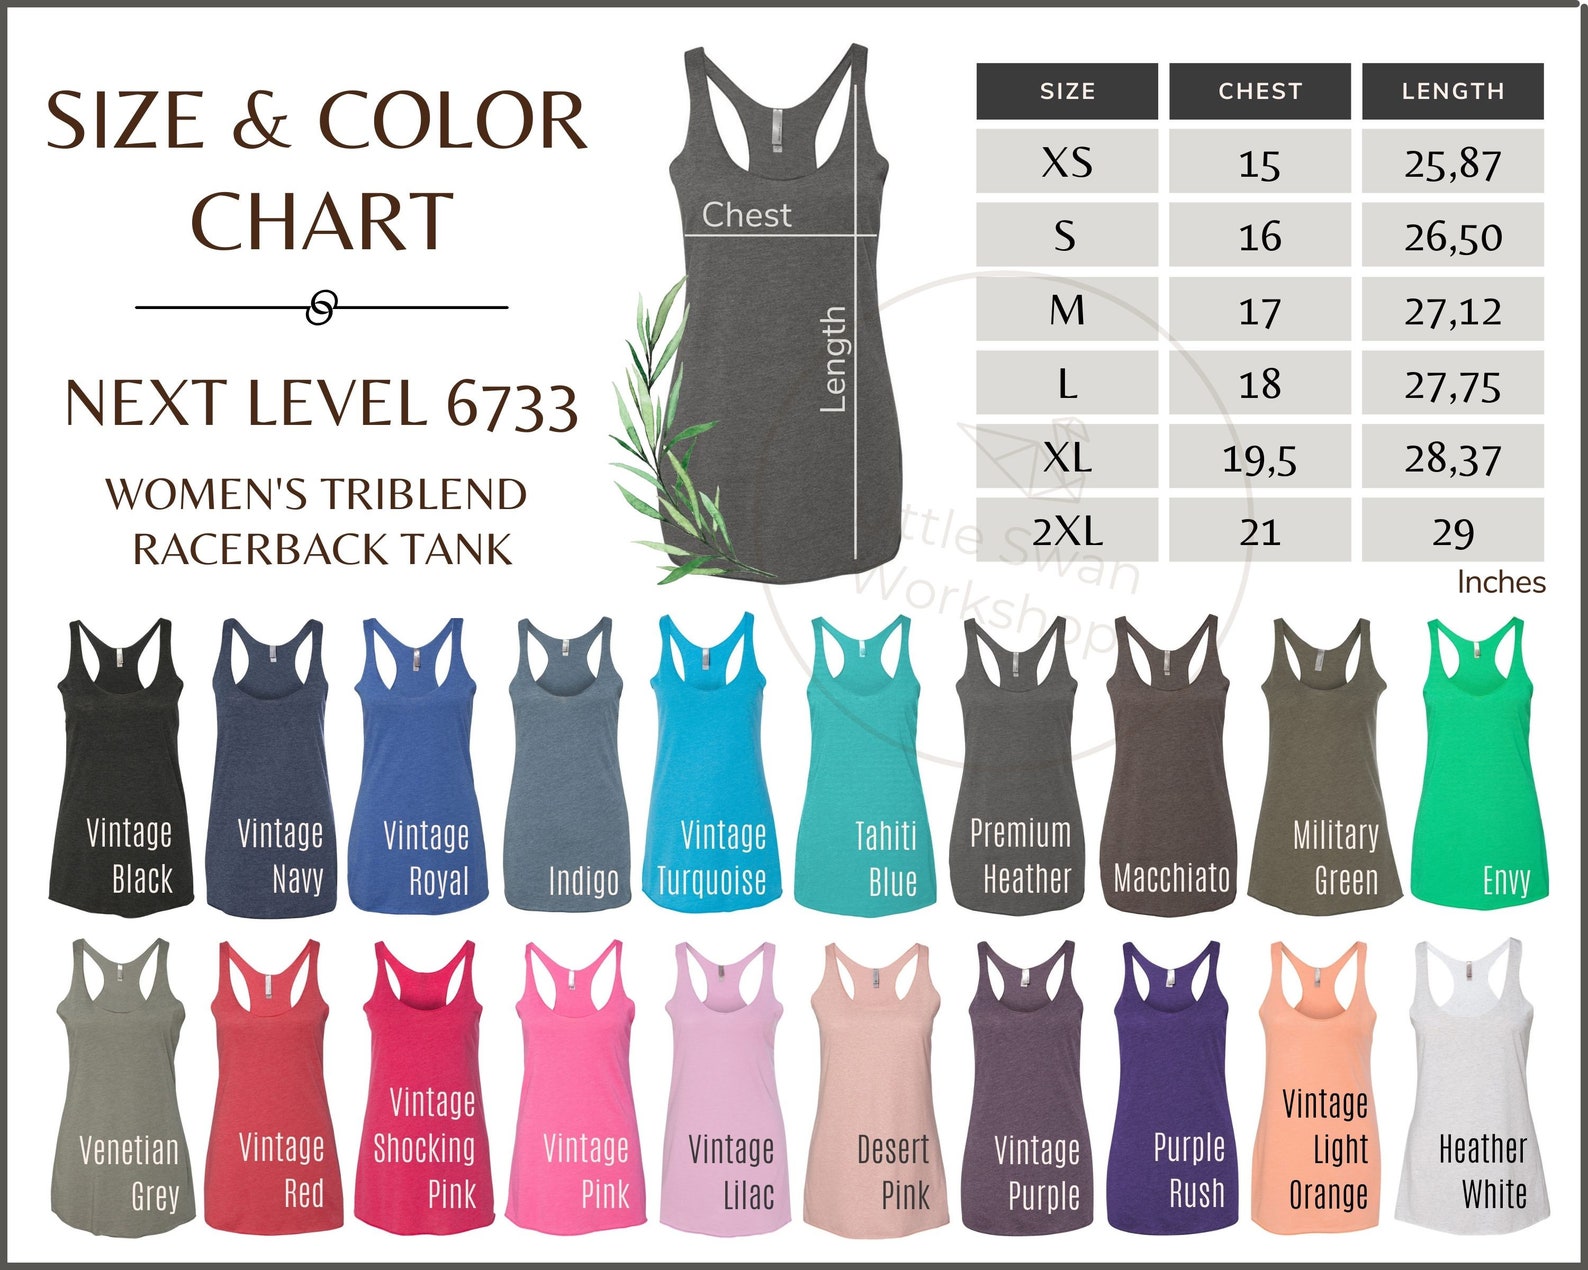 Next Level 6733 Color Chart Next Level Racerback Tank 6733 - Etsy Singapore